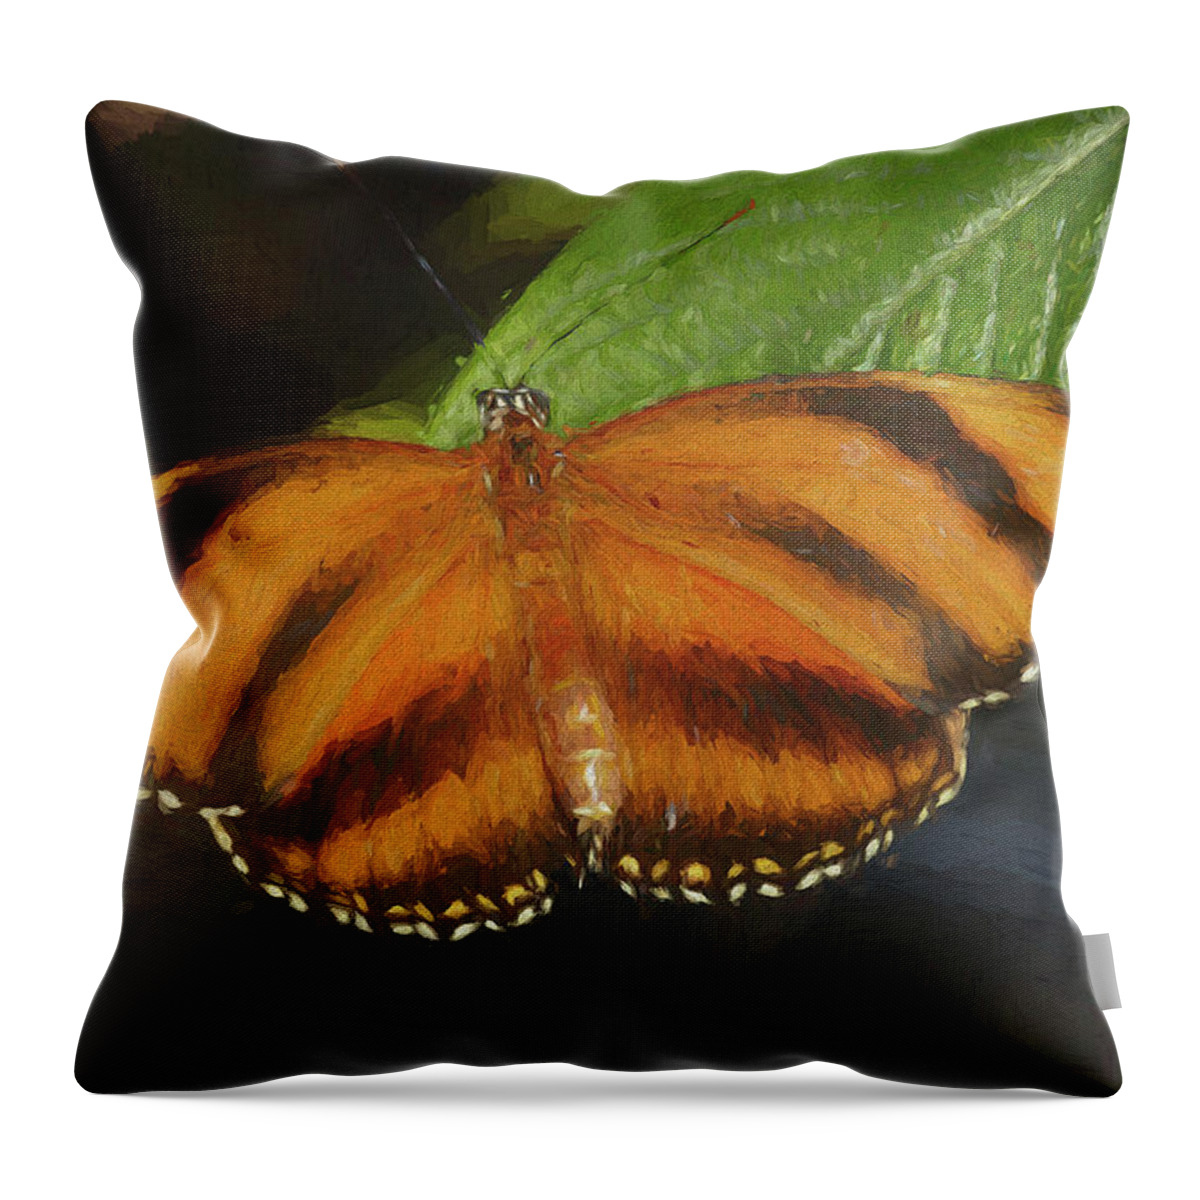 Jon Glaser Throw Pillow featuring the digital art Orange Butterfly by Jon Glaser